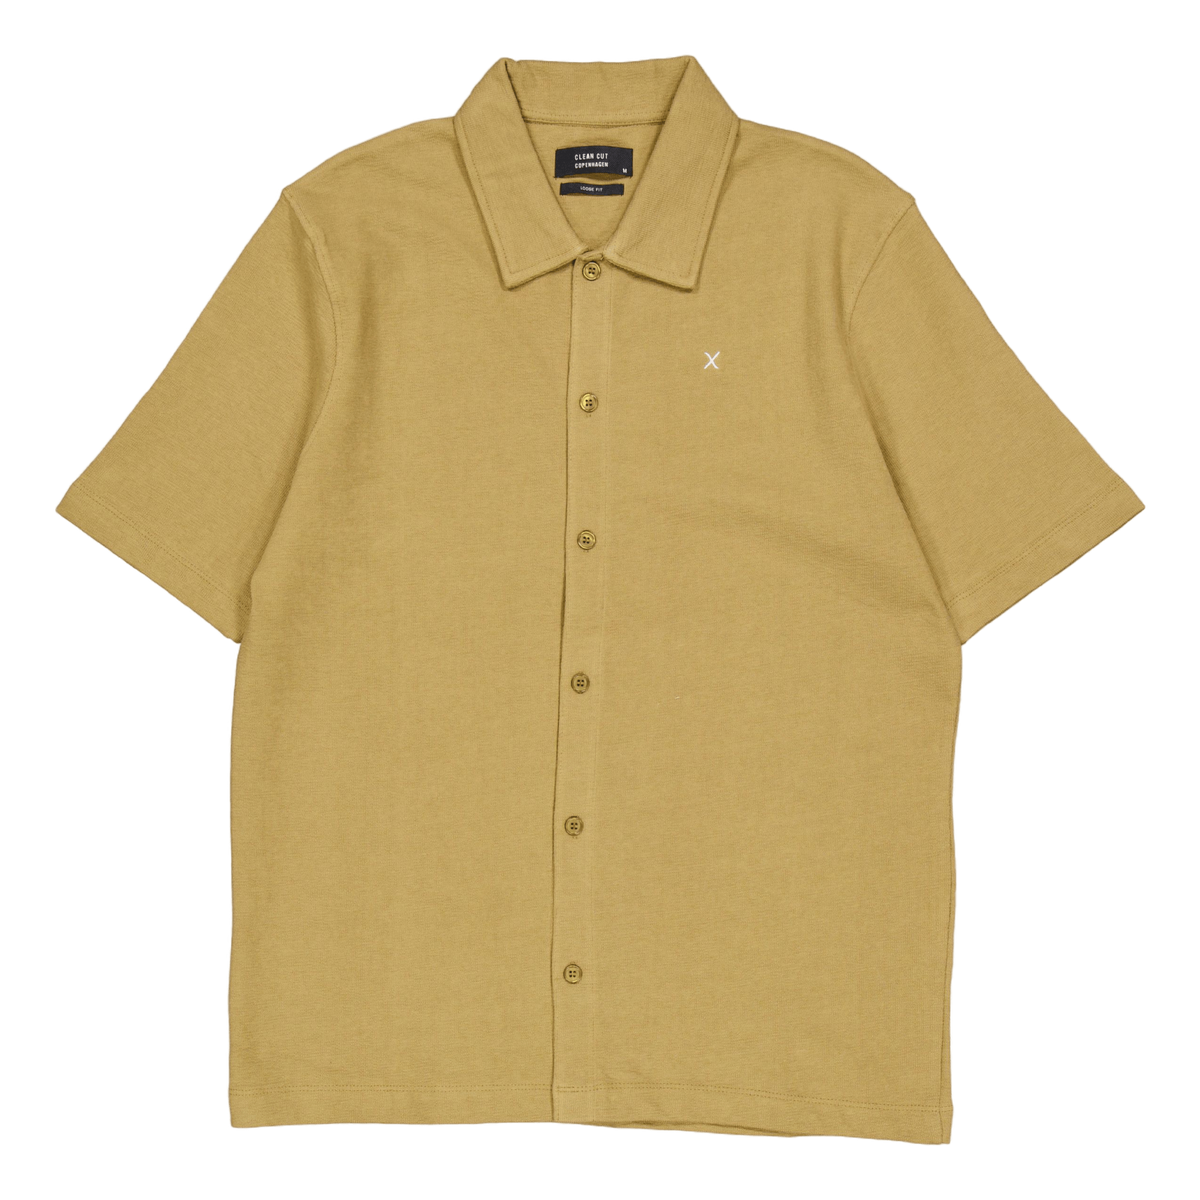 Calton Structured Shirt S/s Dark Khaki